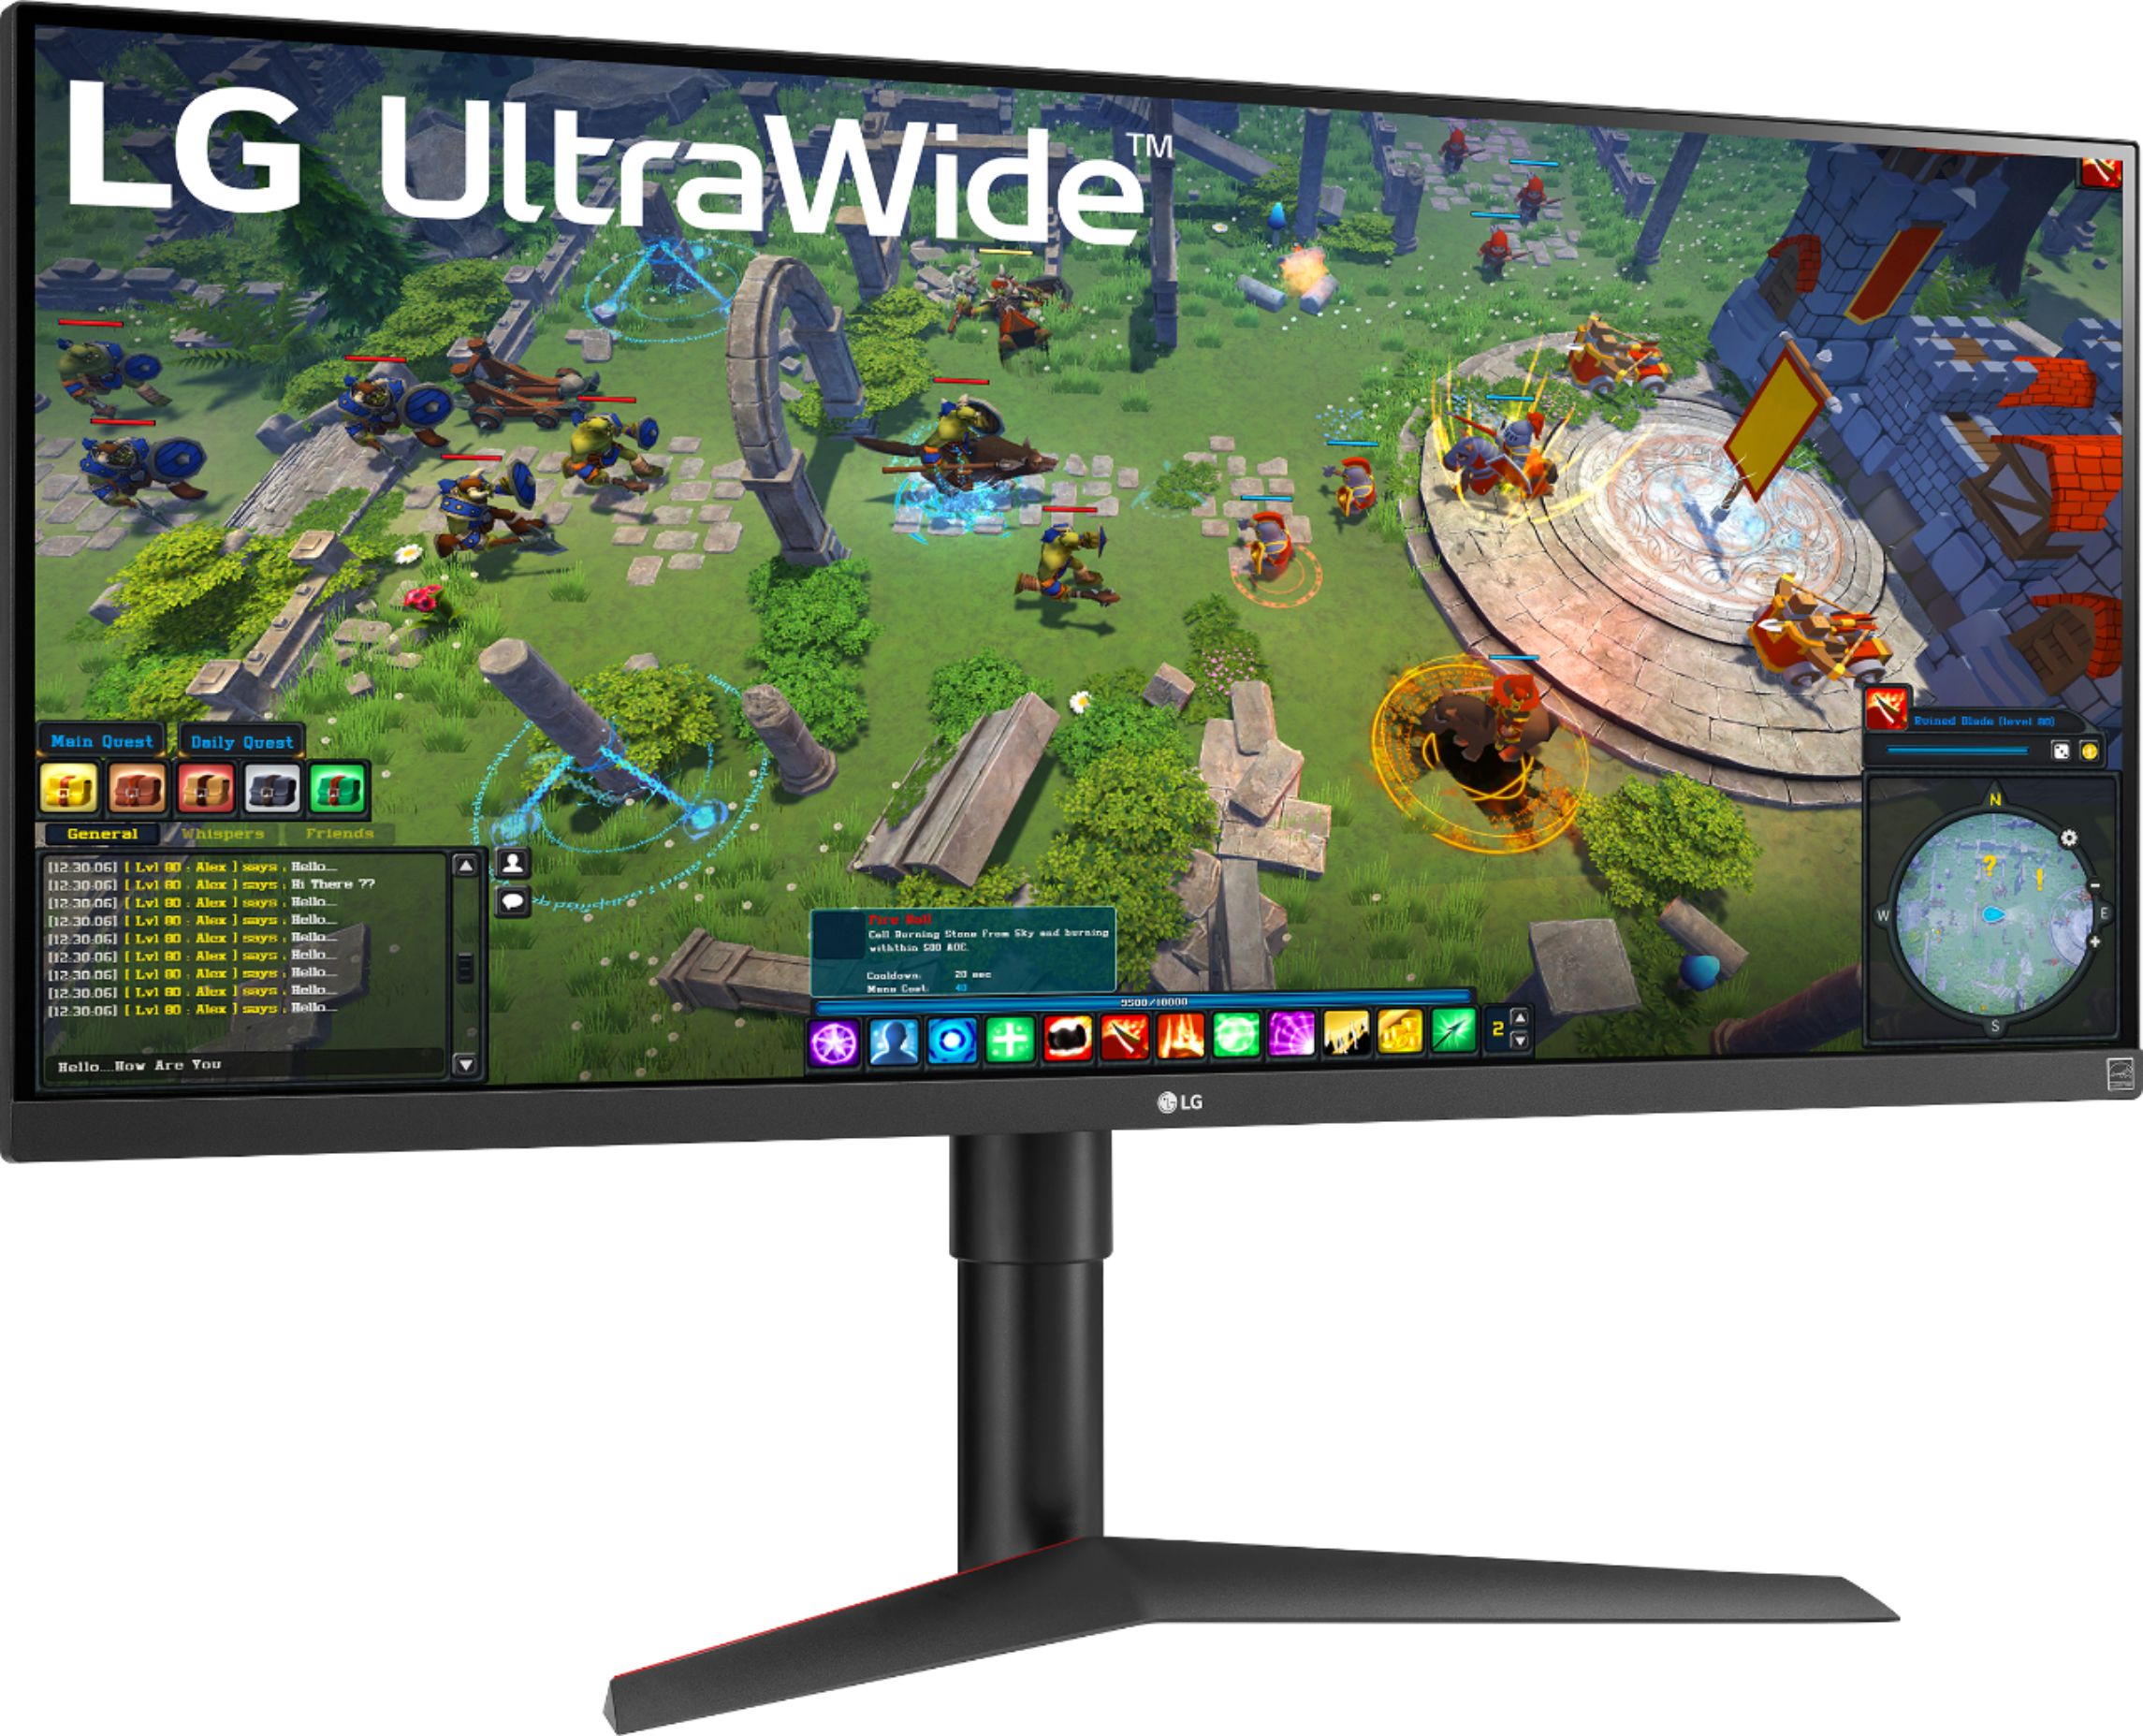 Angle View: LG - 34” UltraWide FHD HDR 75Hz FreeSync Monitor (USB) - Black